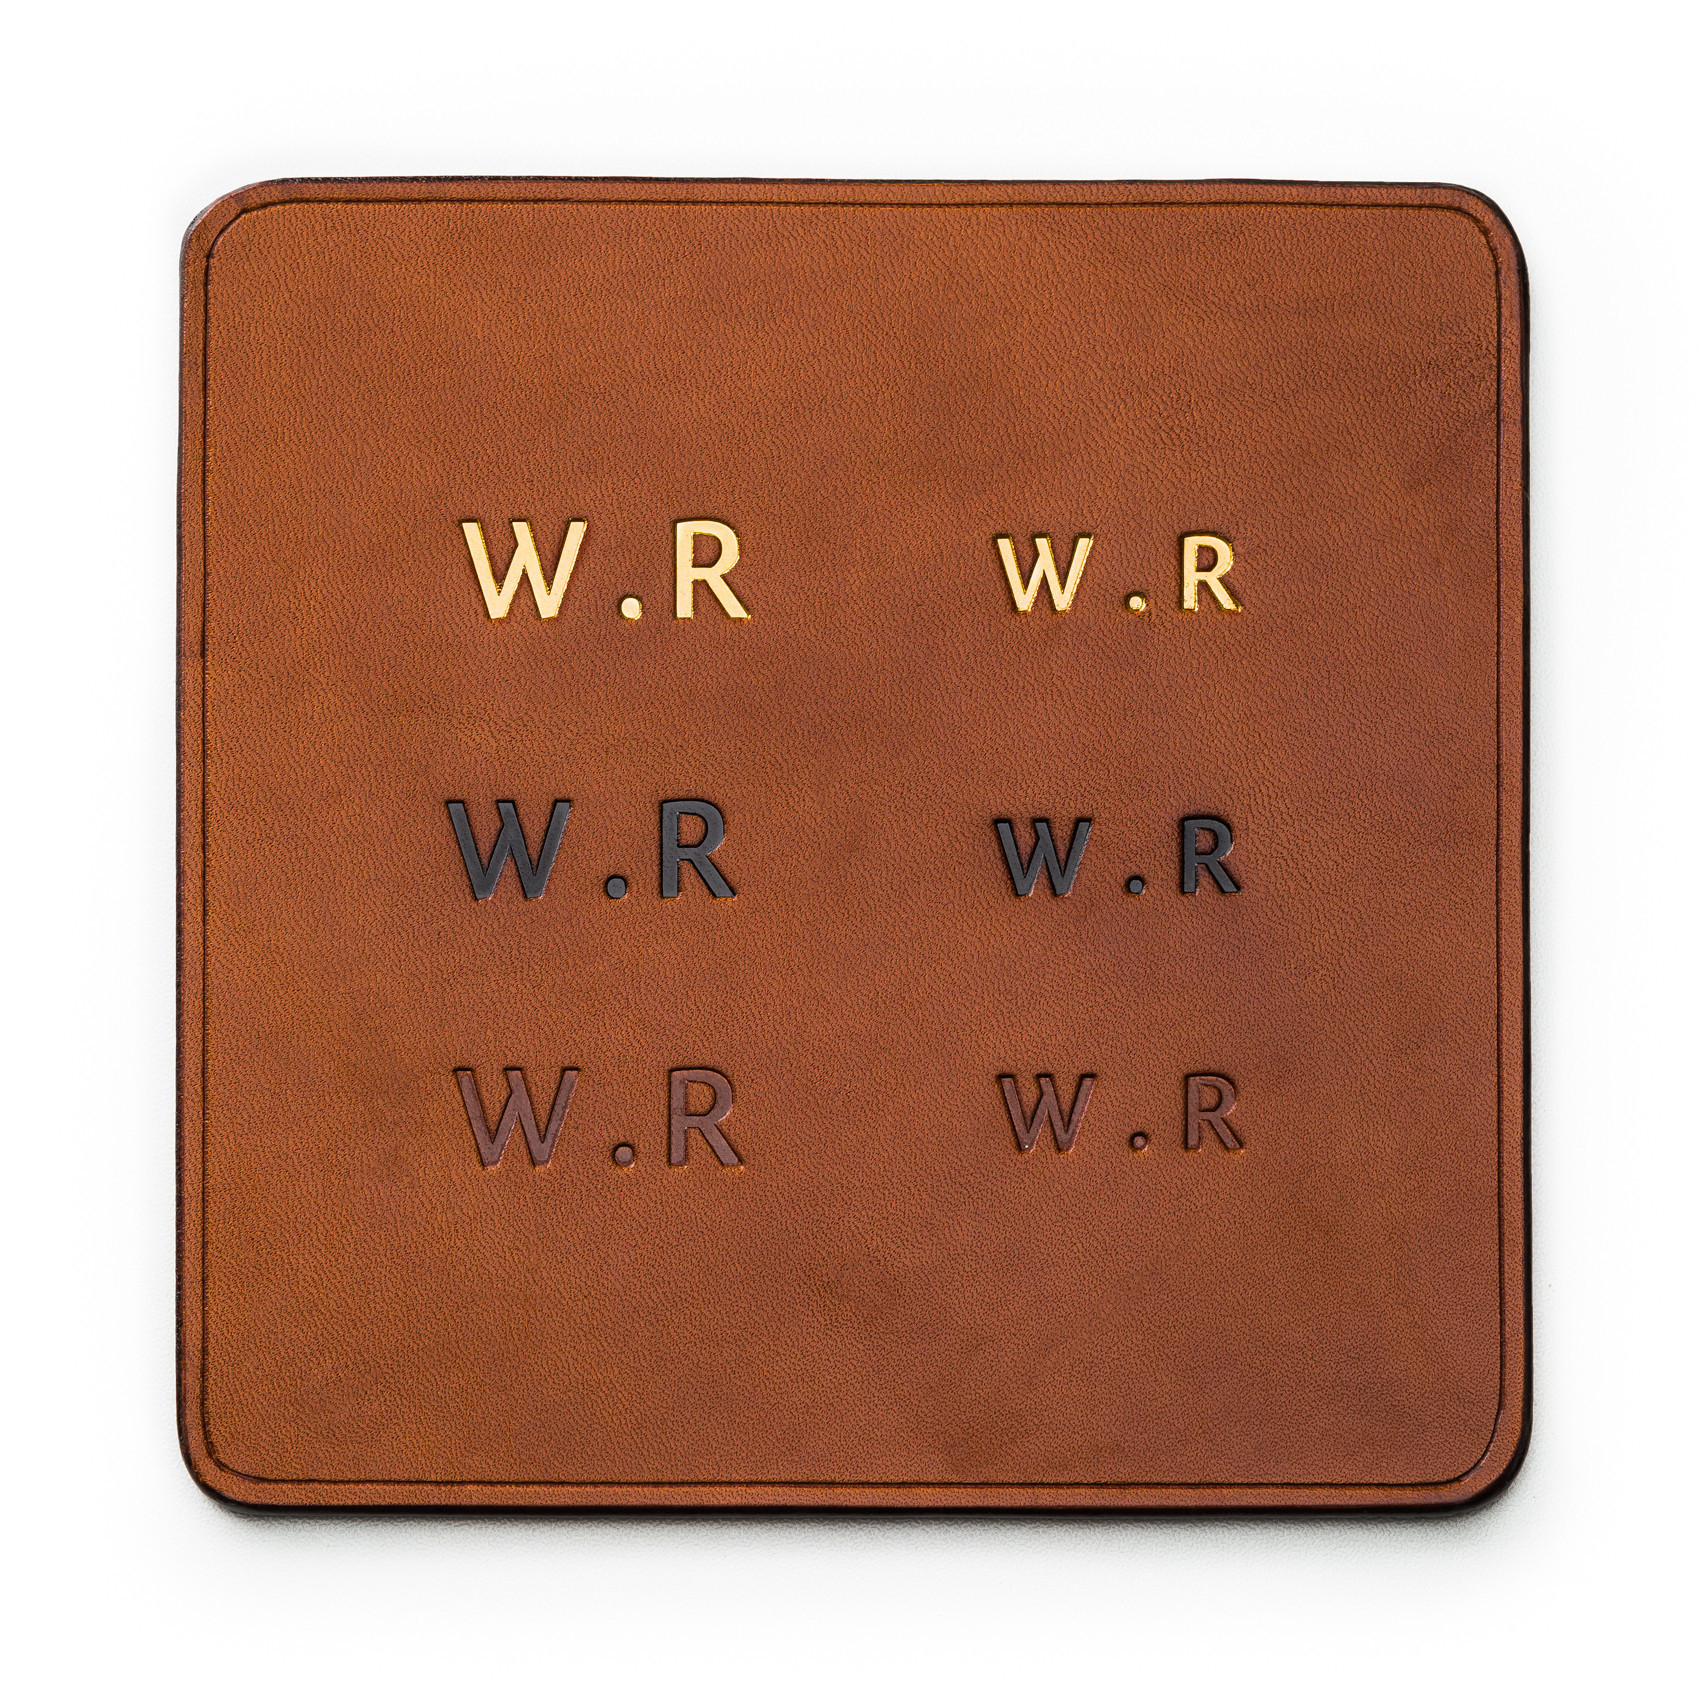 Westley Richards Leather Key Fob